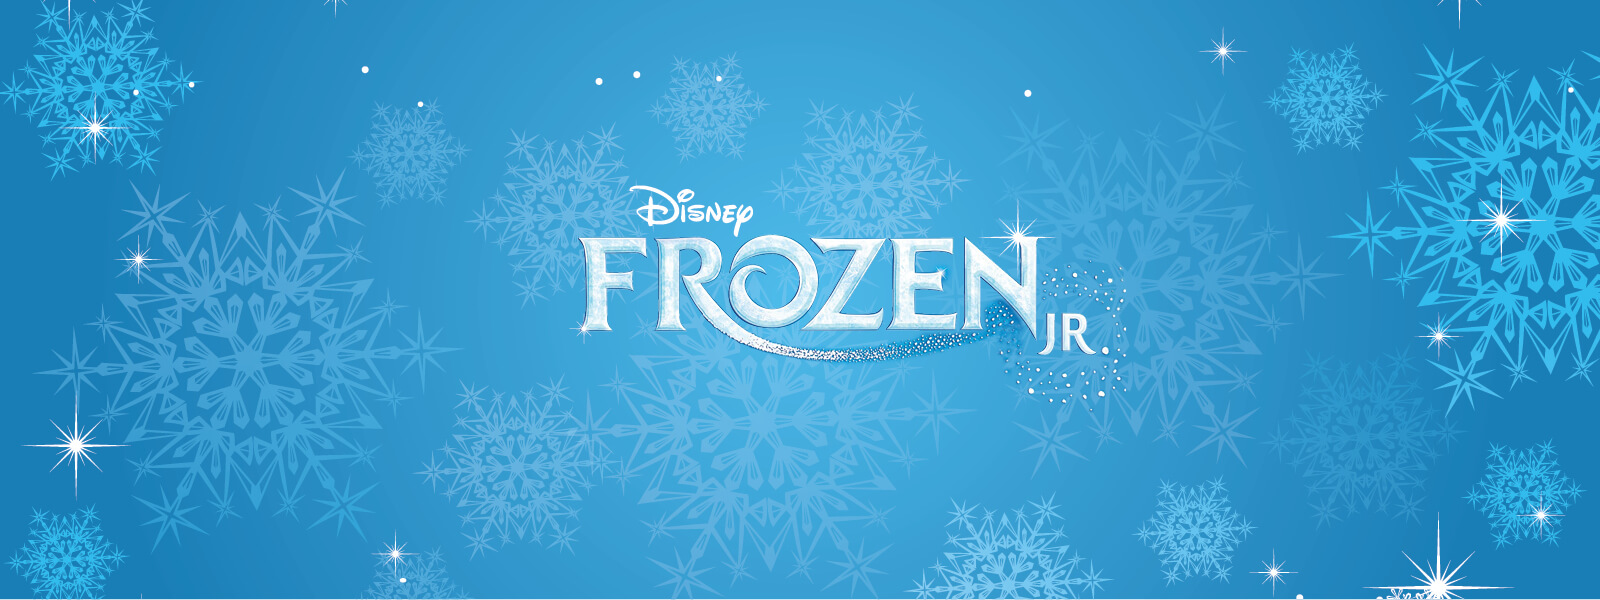 Disney's Frozen Jr. Casting News